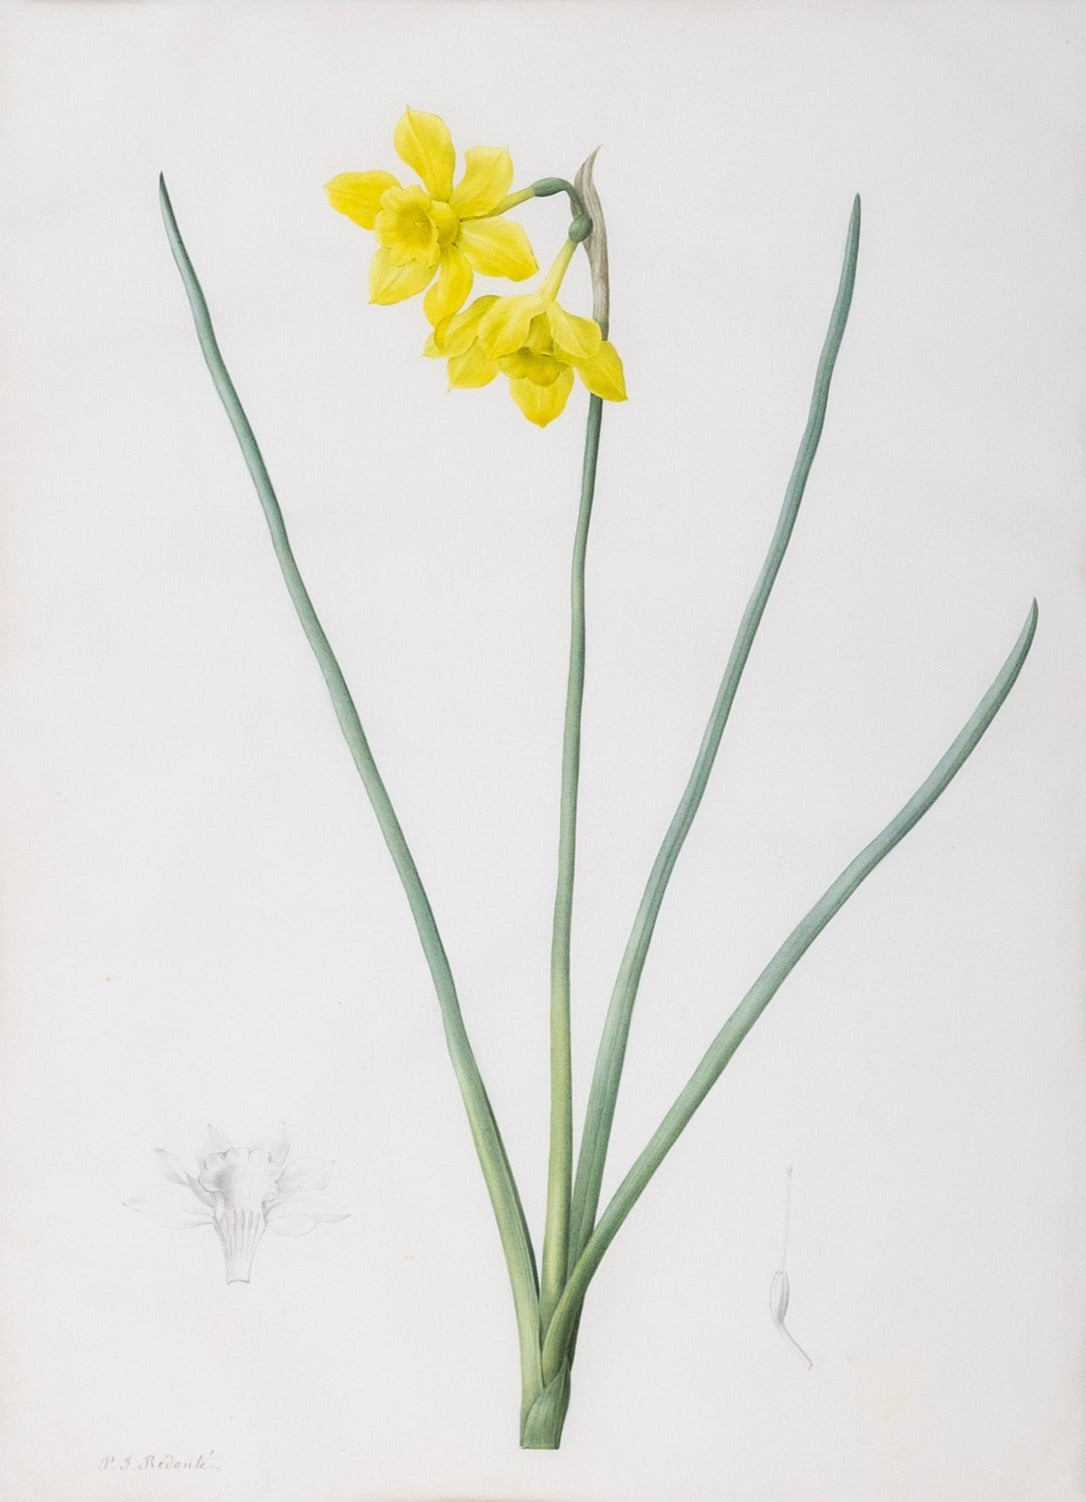 Redouté, Pierre-Joseph. "Fragrant Daffodil". Prepared for Les Liliacées, ca. 1802-1816.